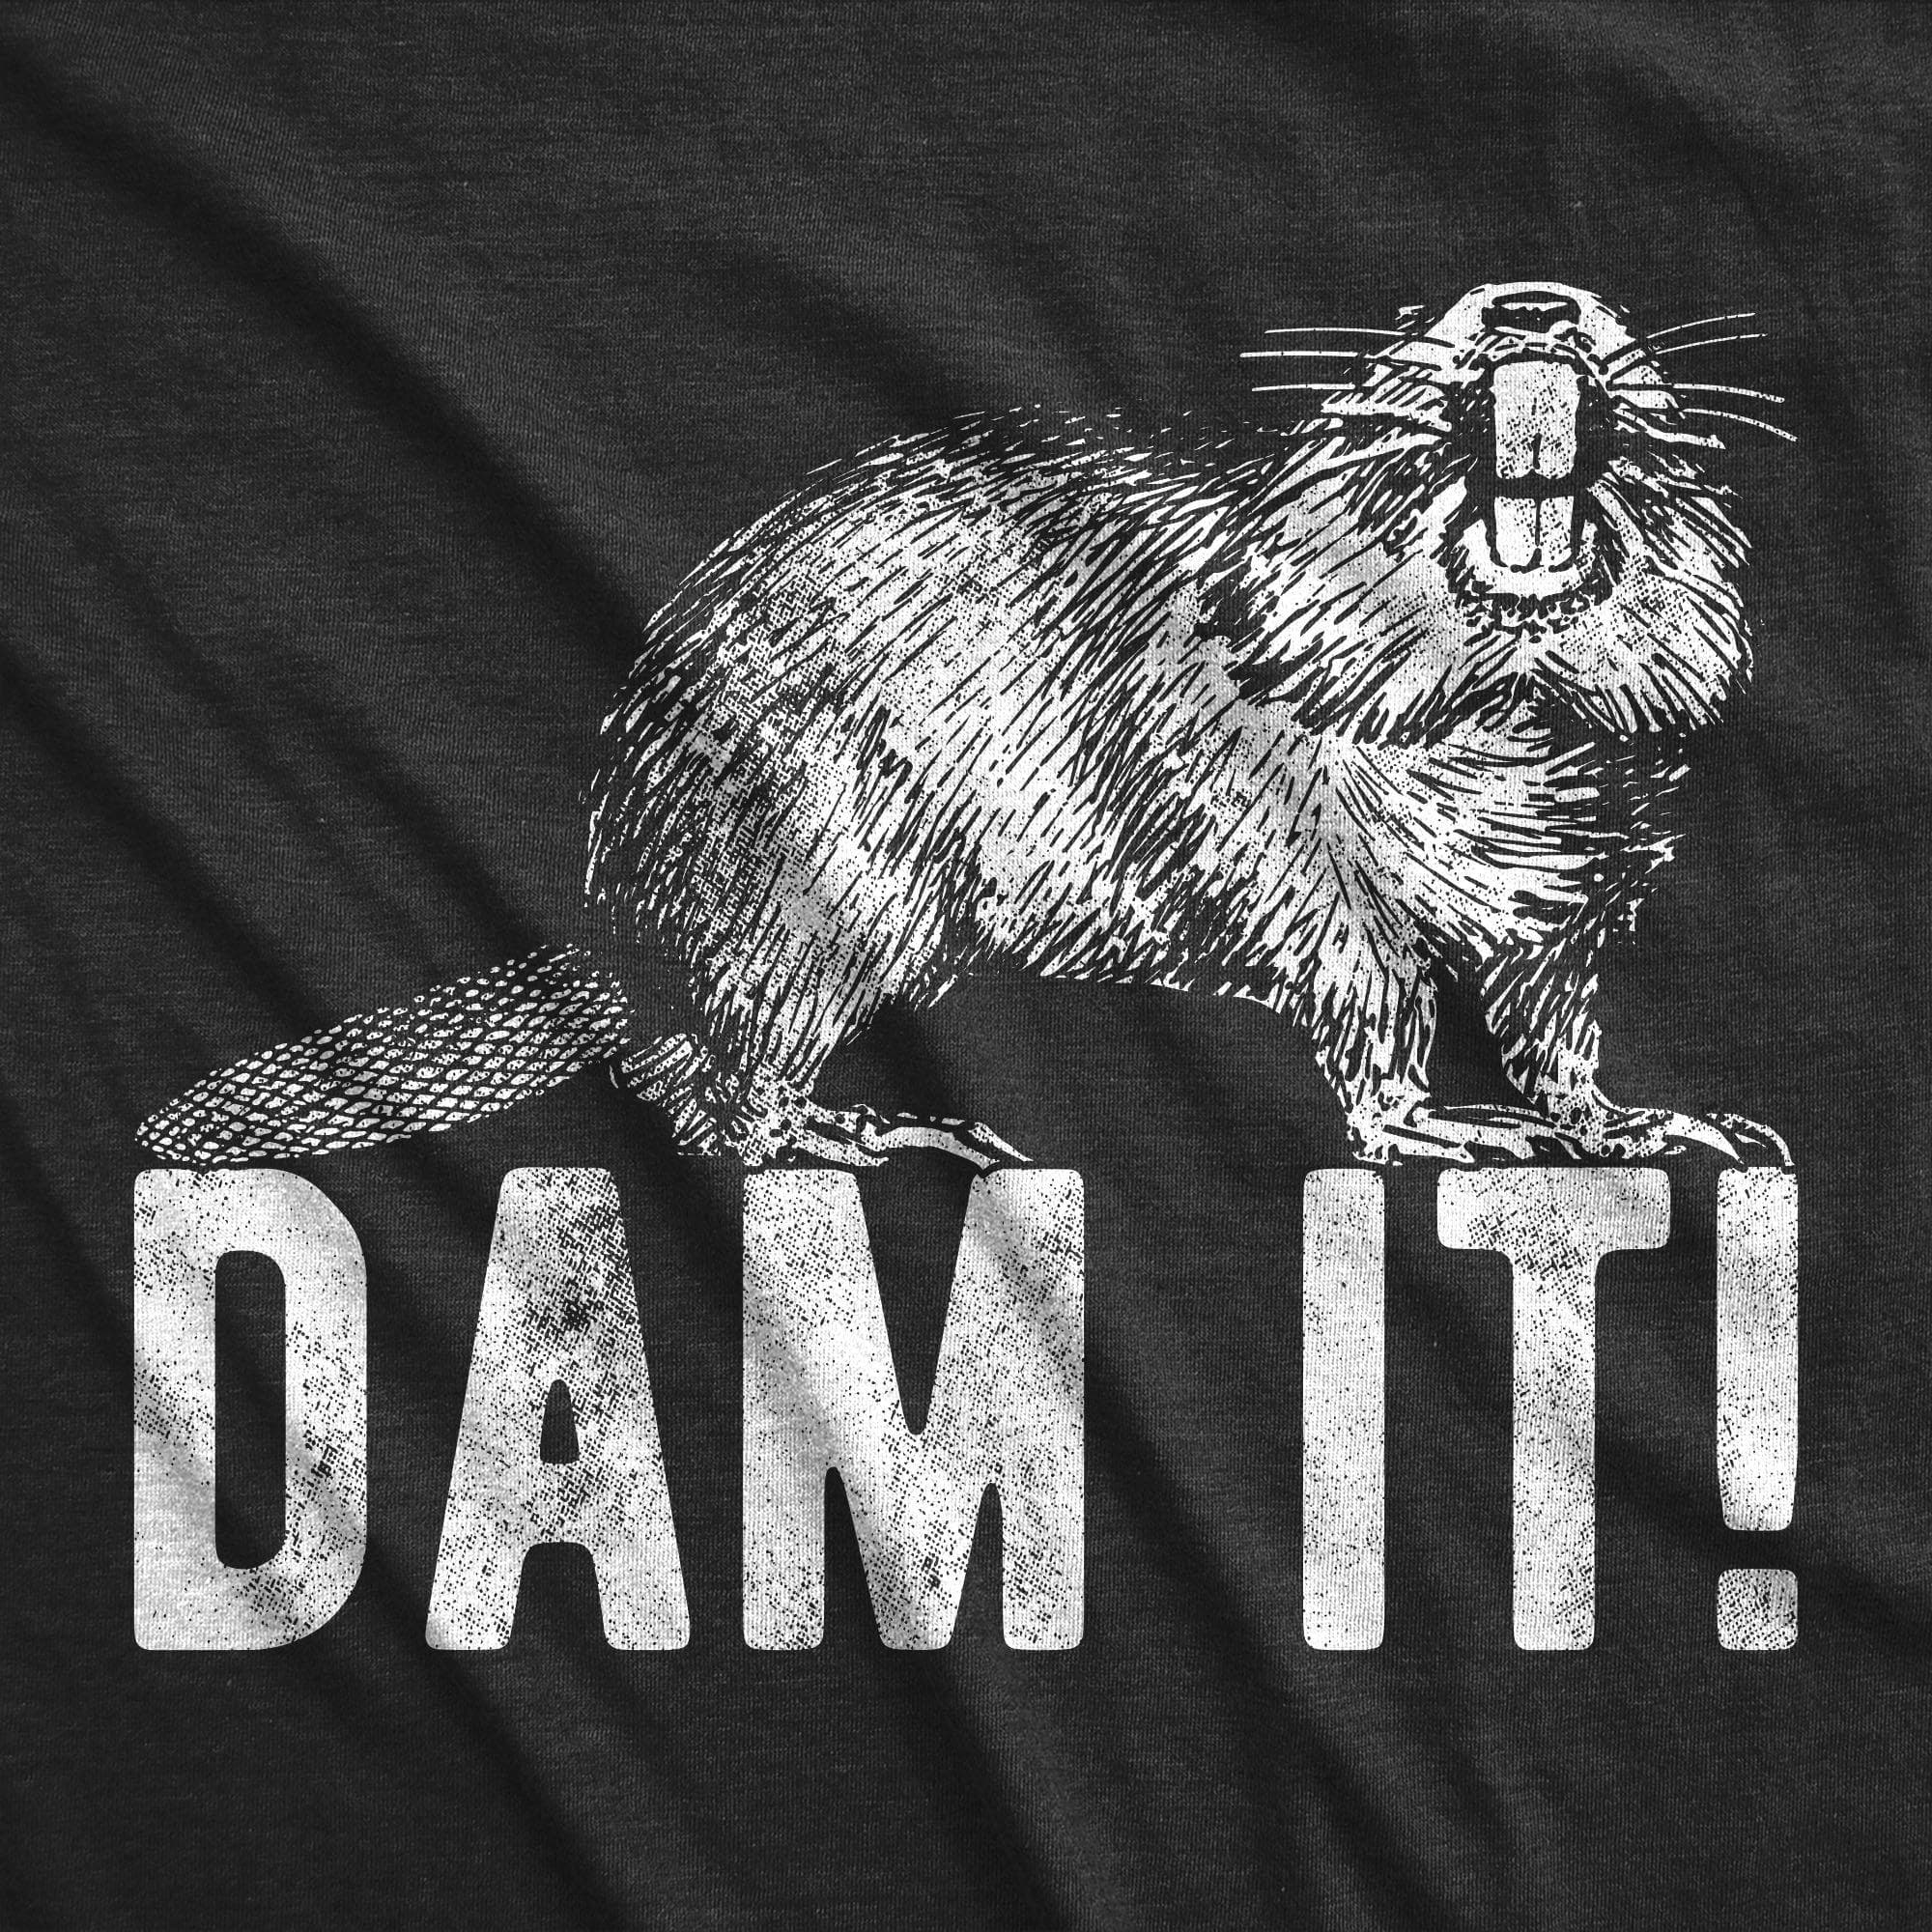 Dam It Men's Tshirt - Crazy Dog T-Shirts